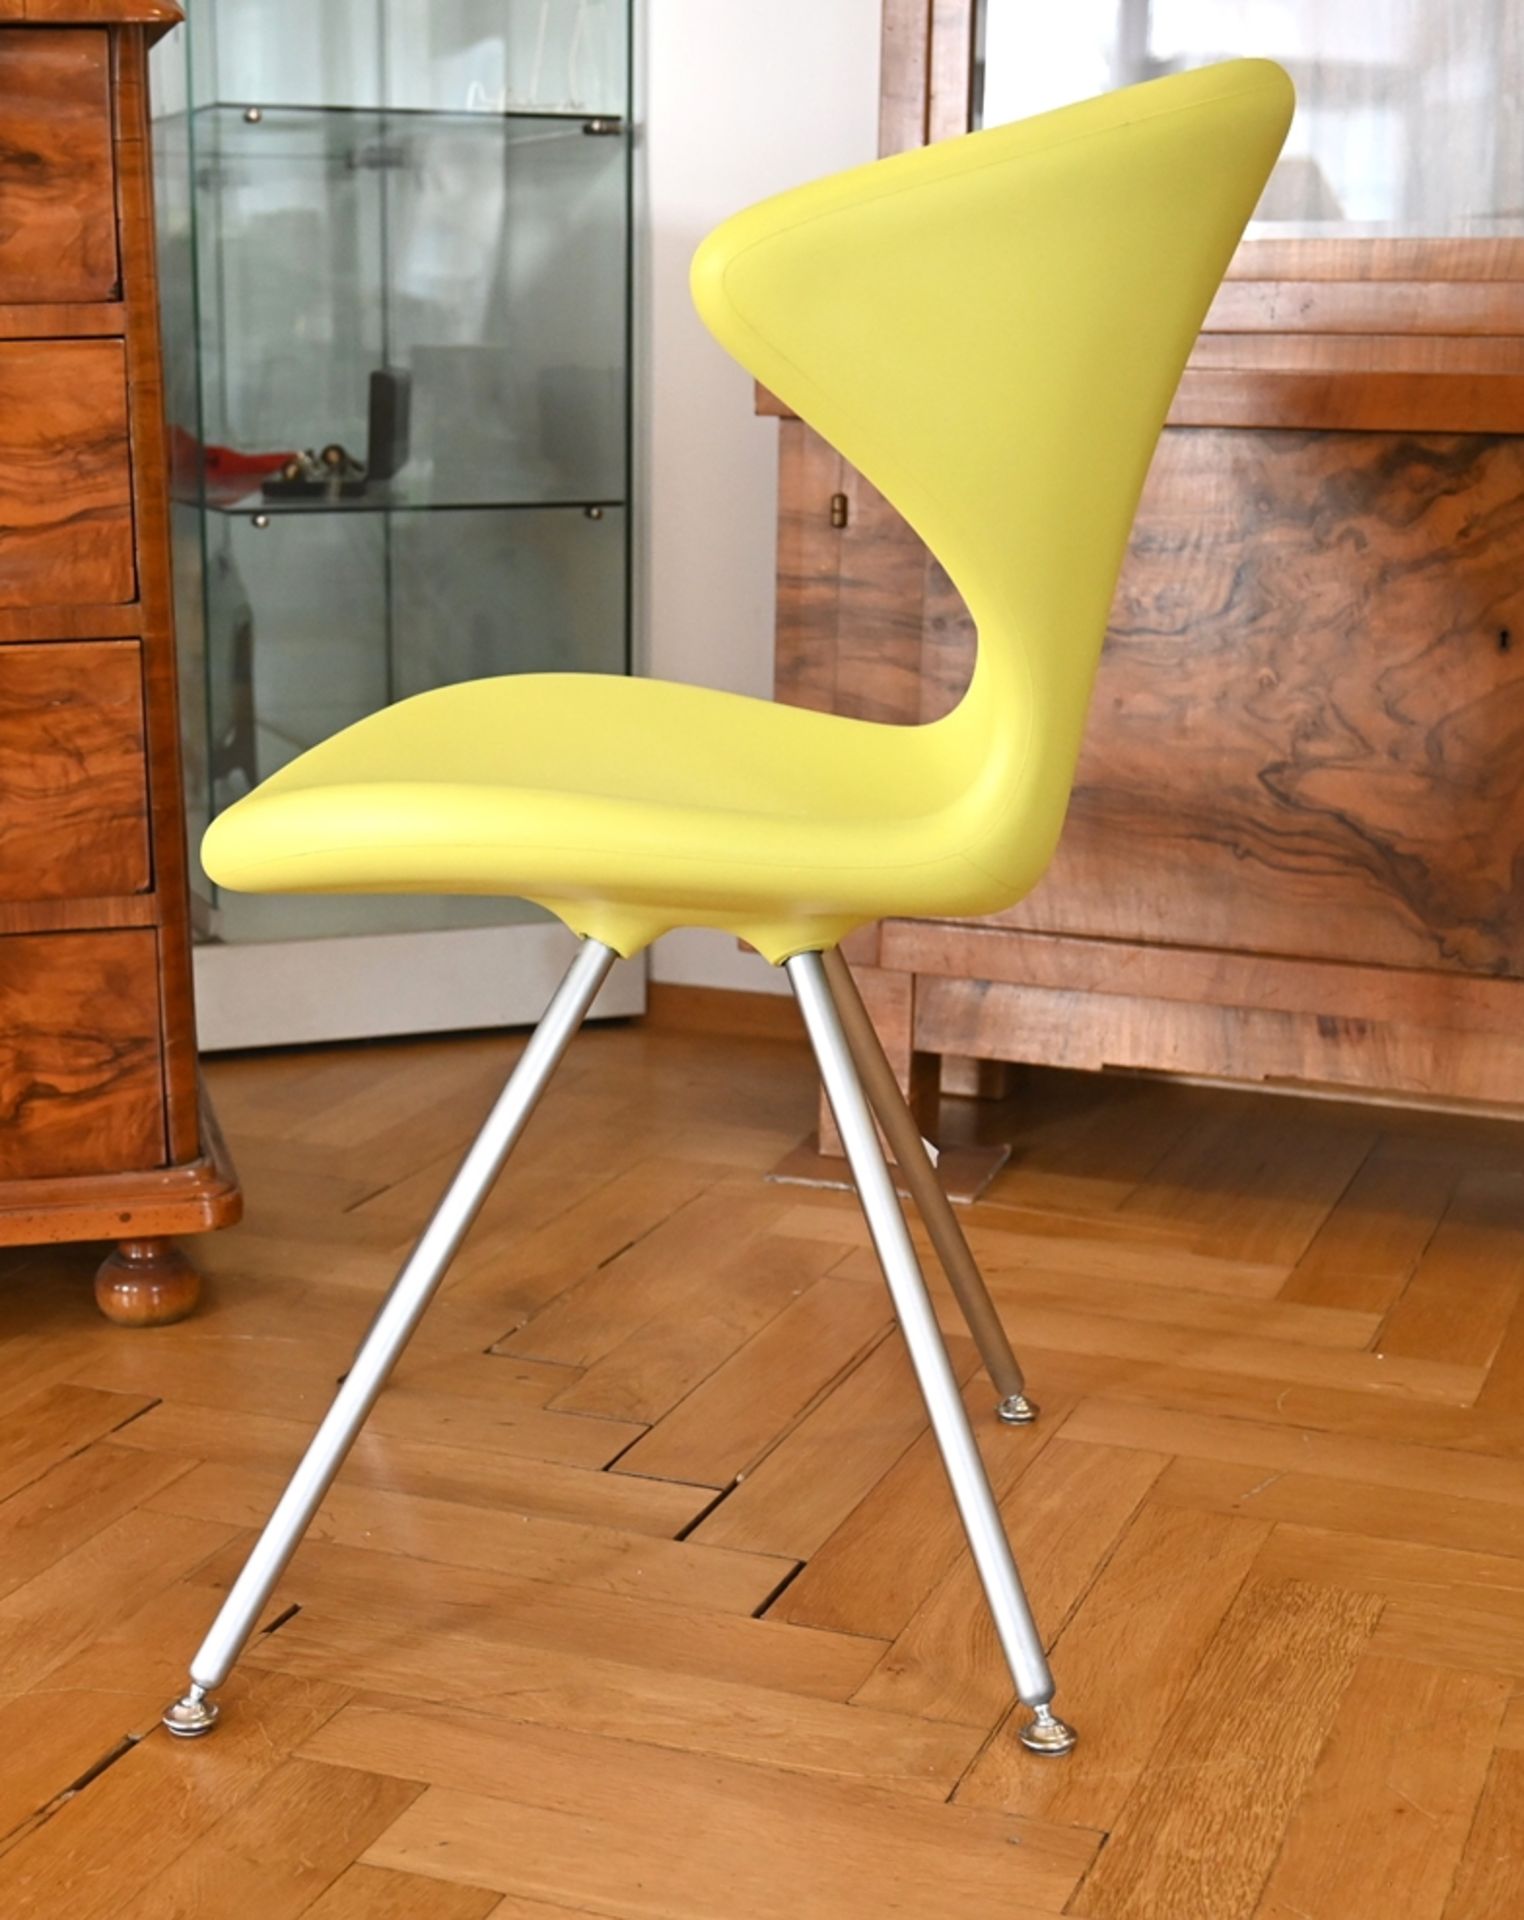 Design chair, Tonon Concept 902 with metal feet, curved shape, design Martin Ballendat (1958 Bochum - Image 2 of 5